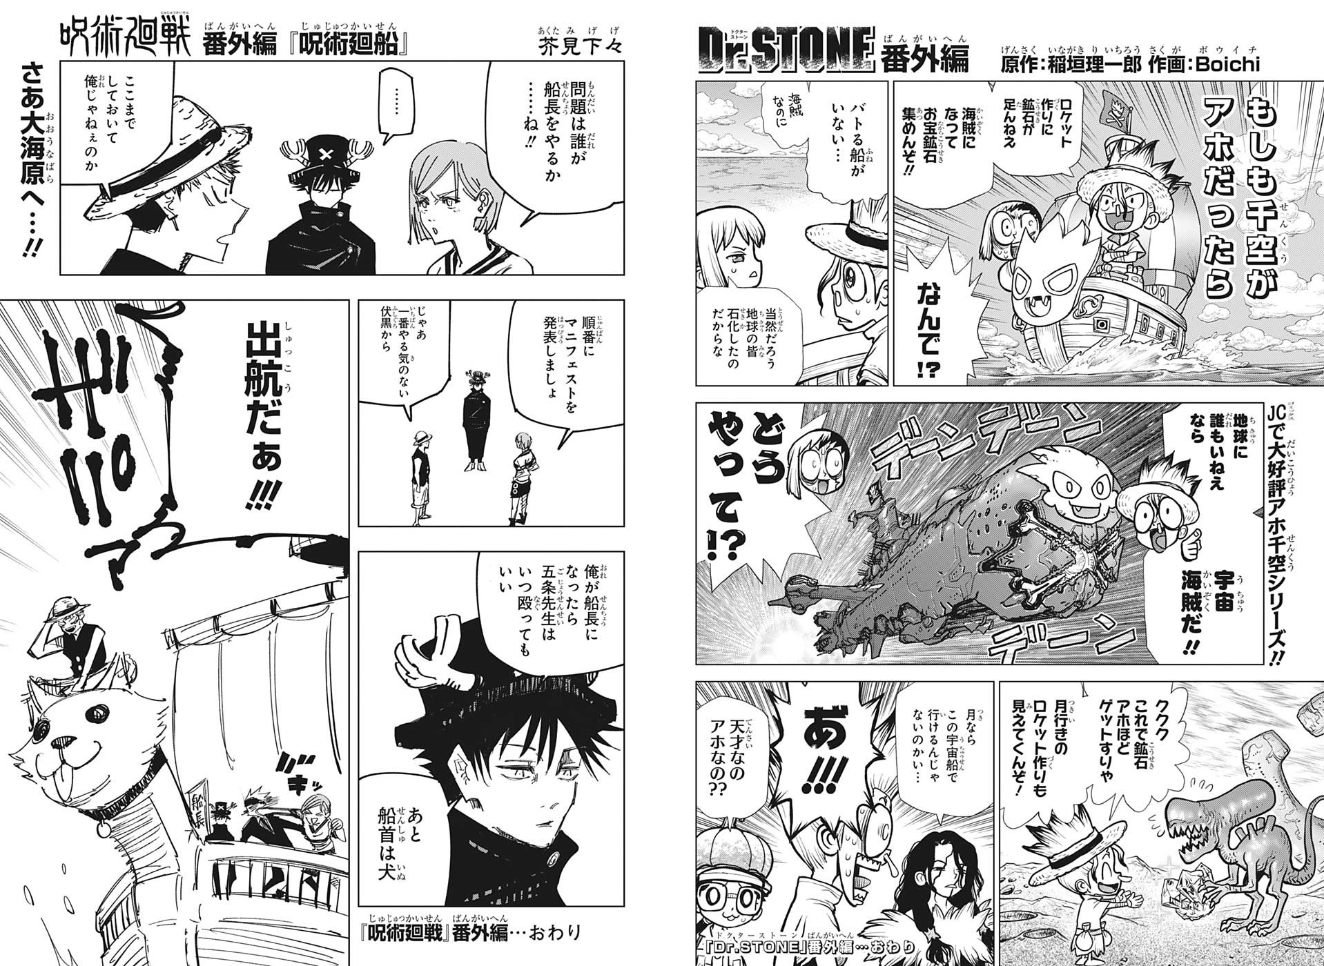 Shonen Jump News Unofficial One Piece S Chapter 1000 Commemoration